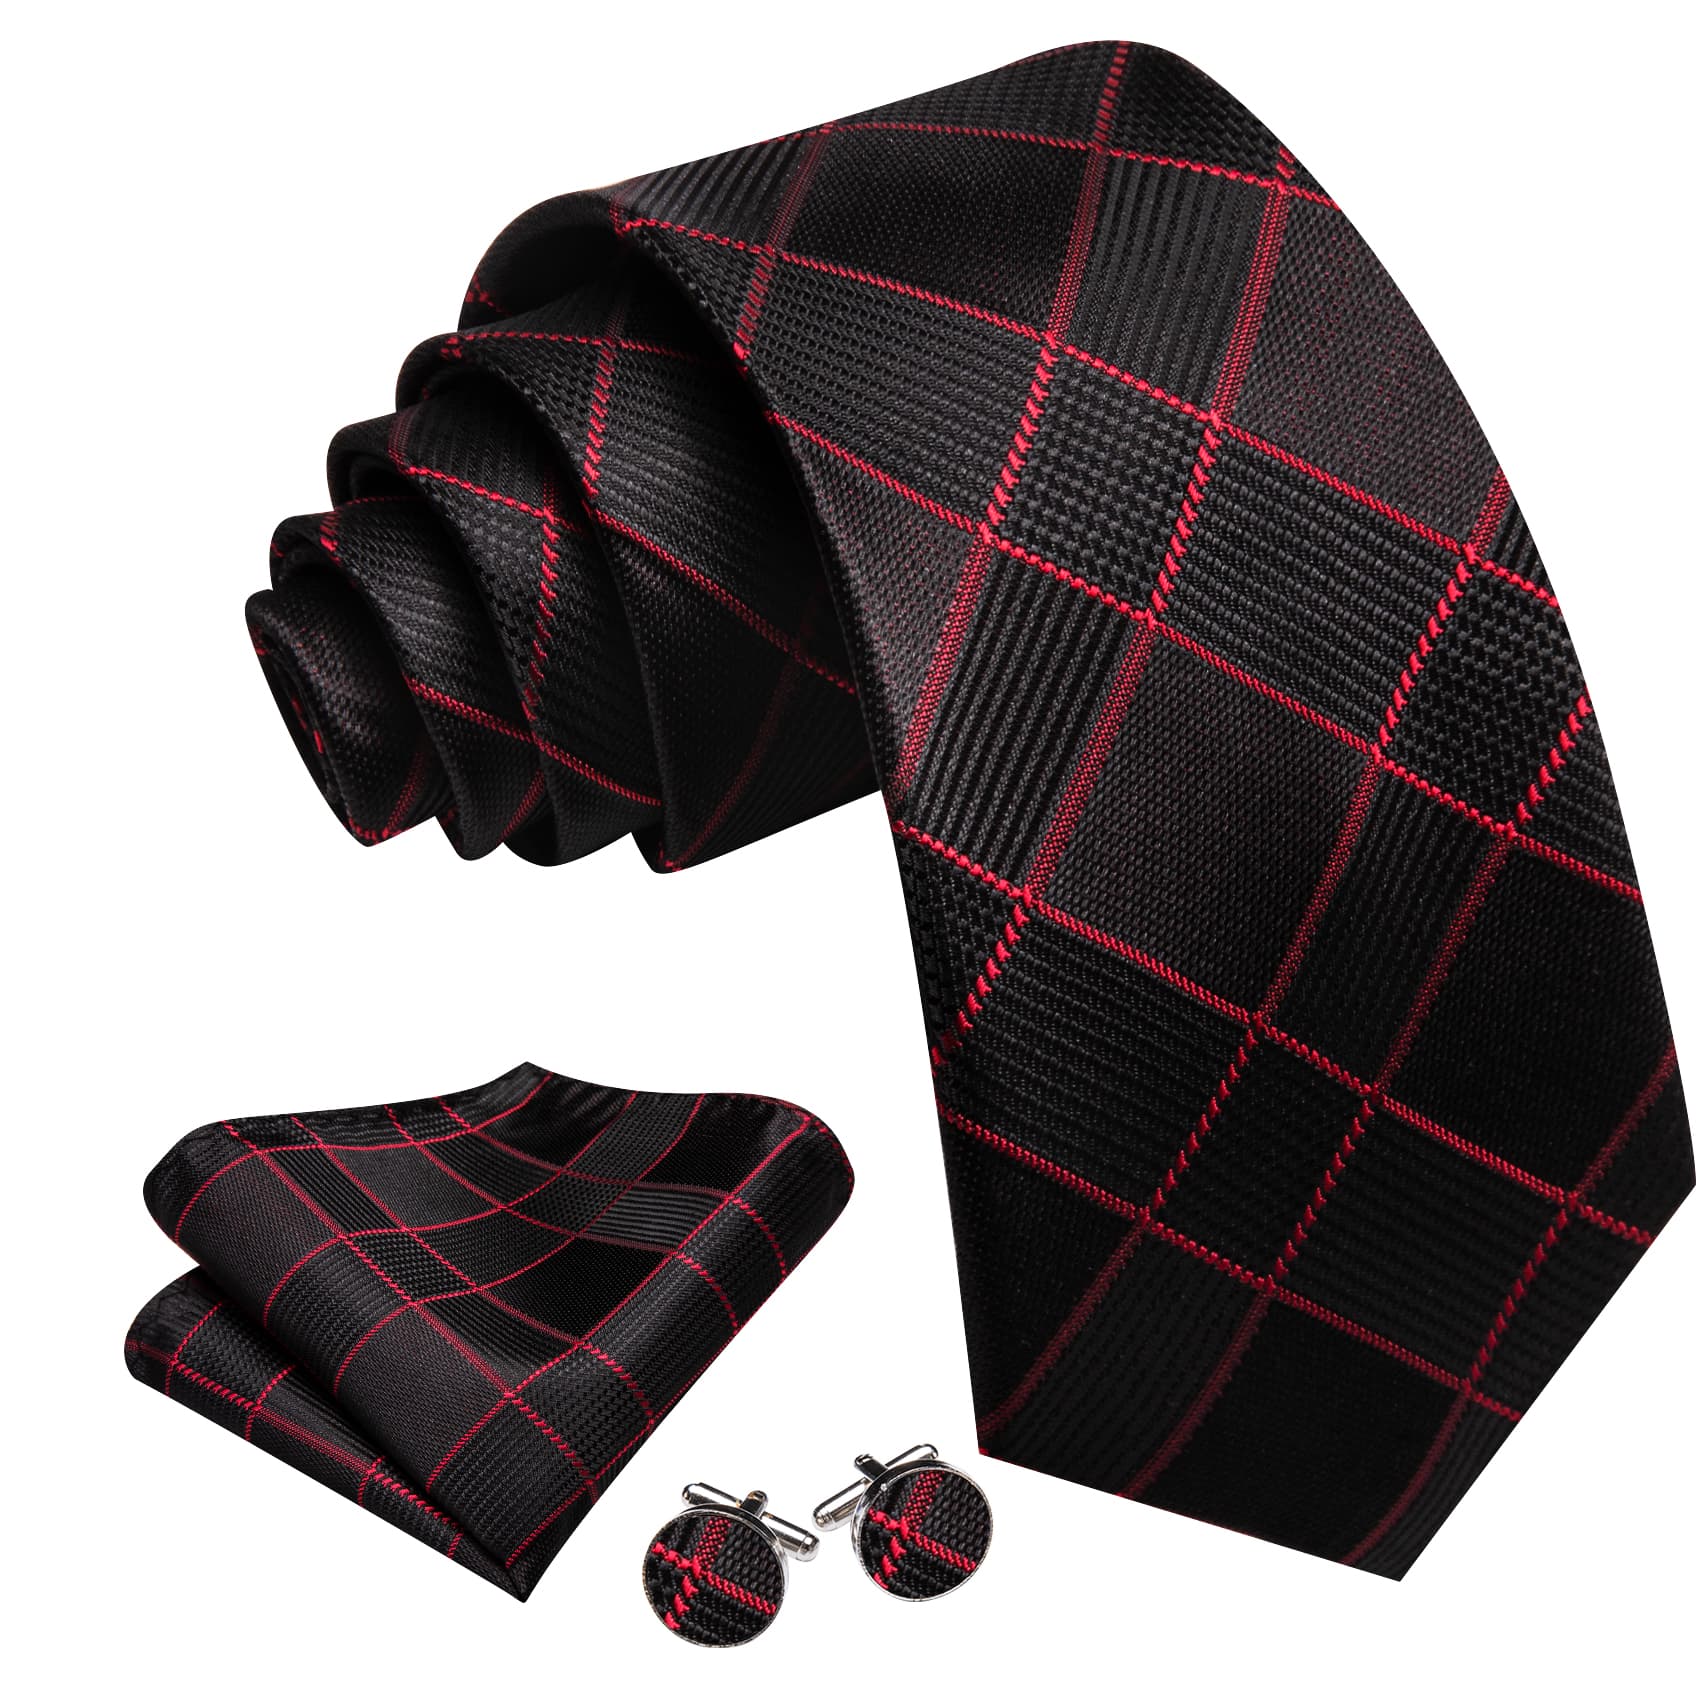  Black Plaid Tie with Red Stripes Men's Business Set